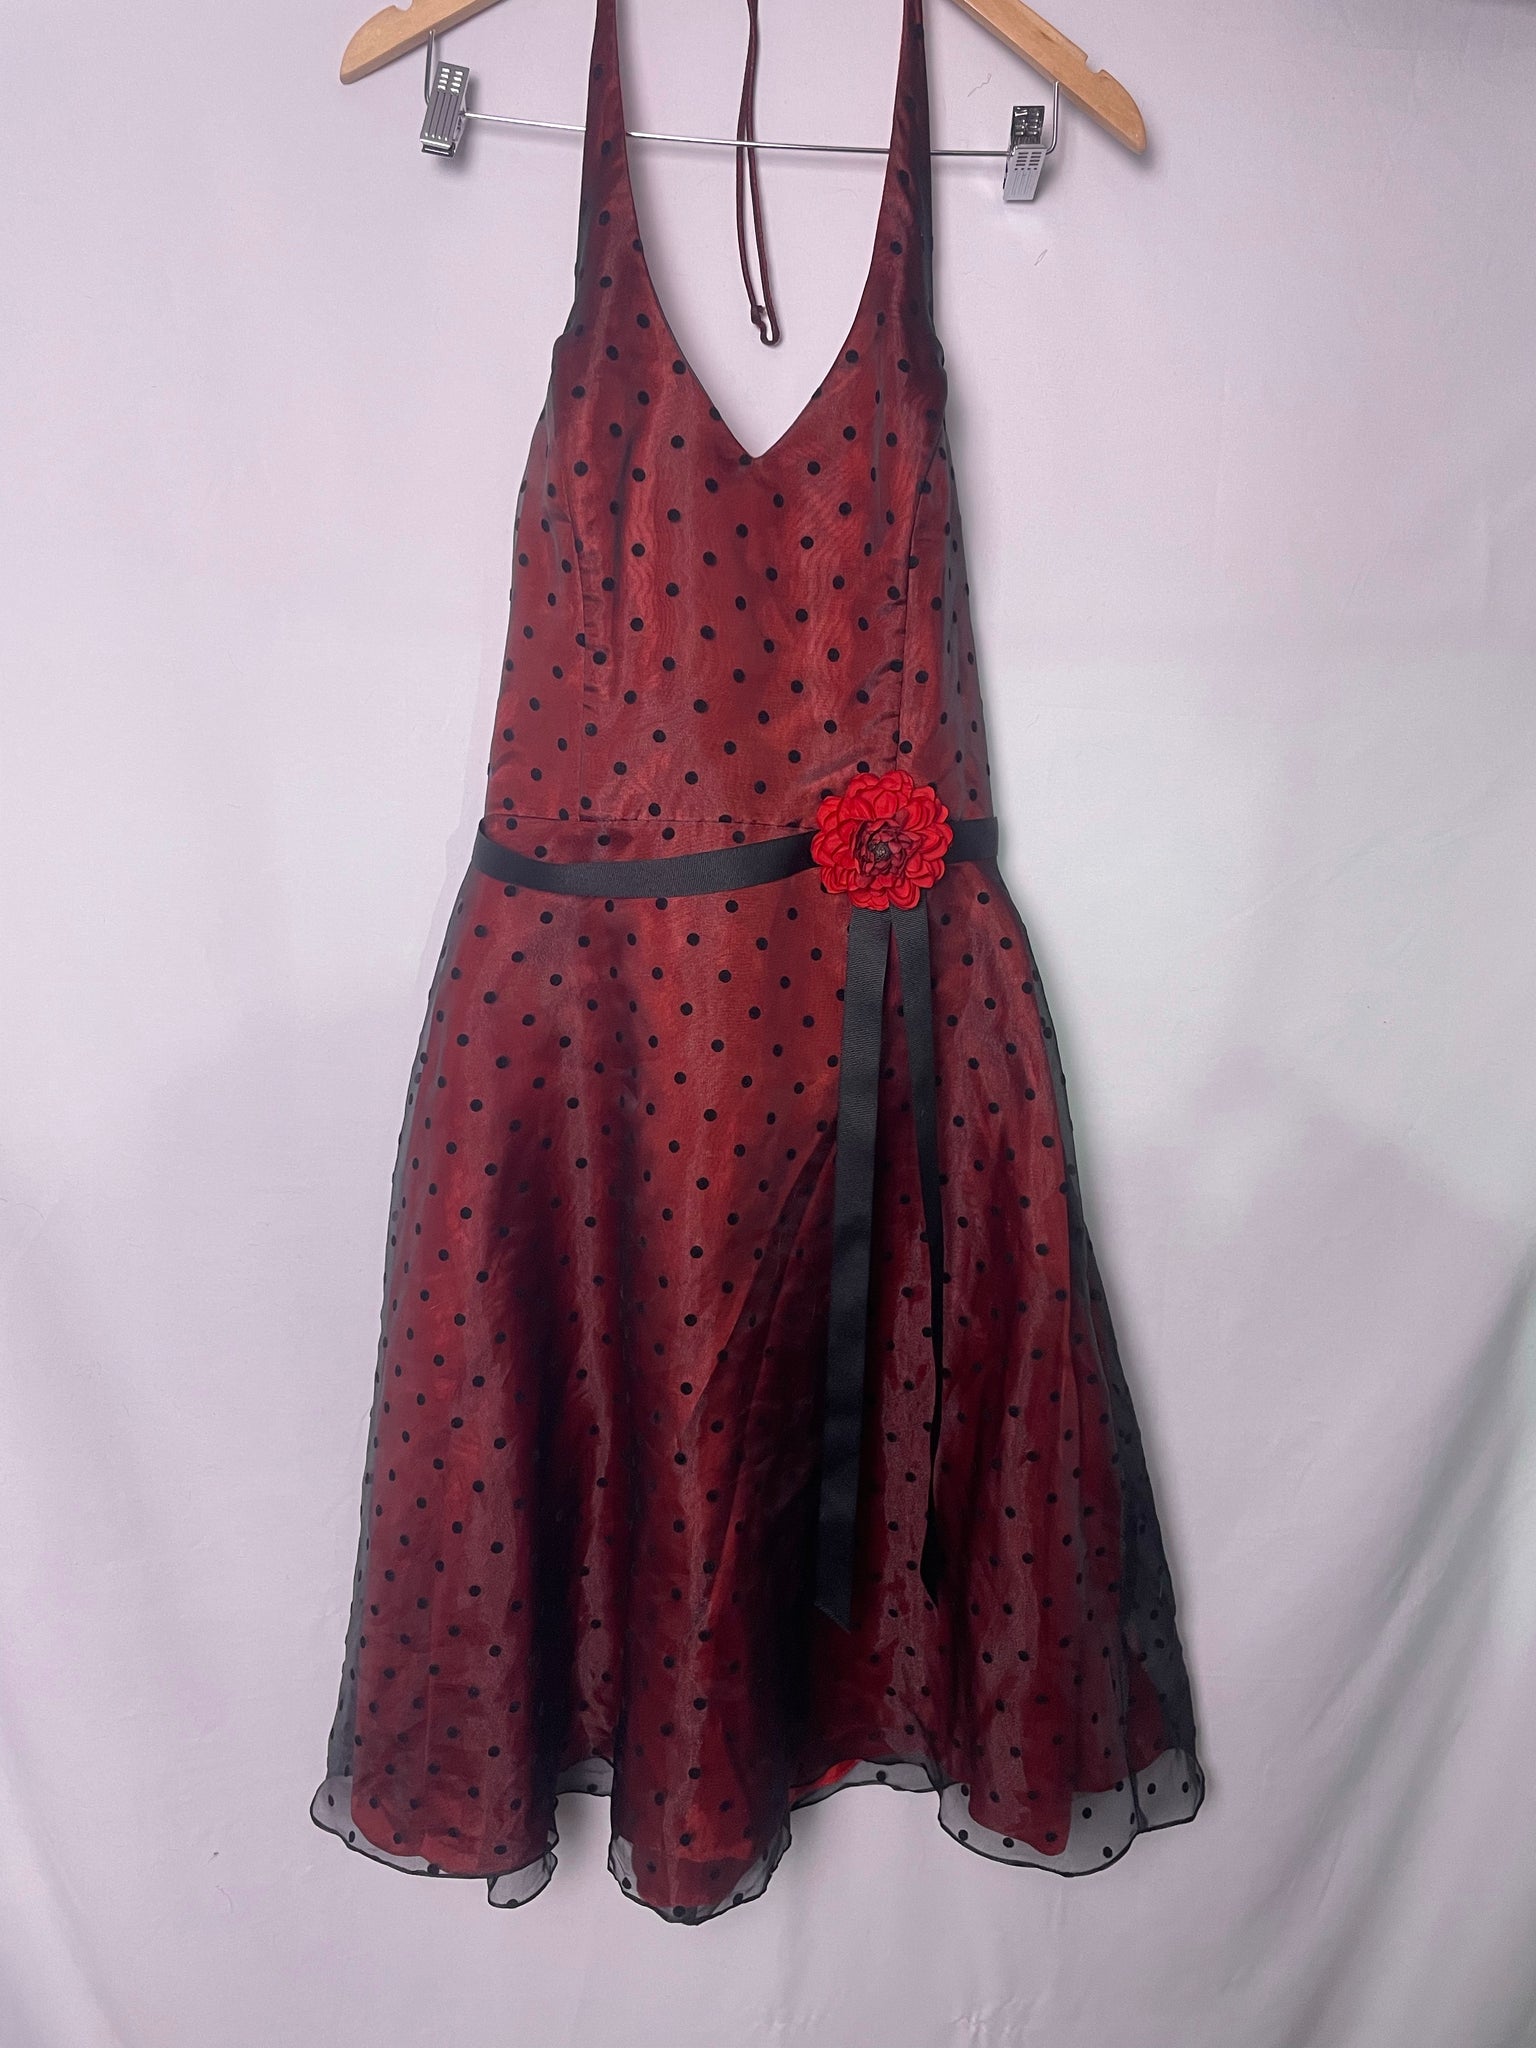 Vintage 80s polka dot dress, Size 10